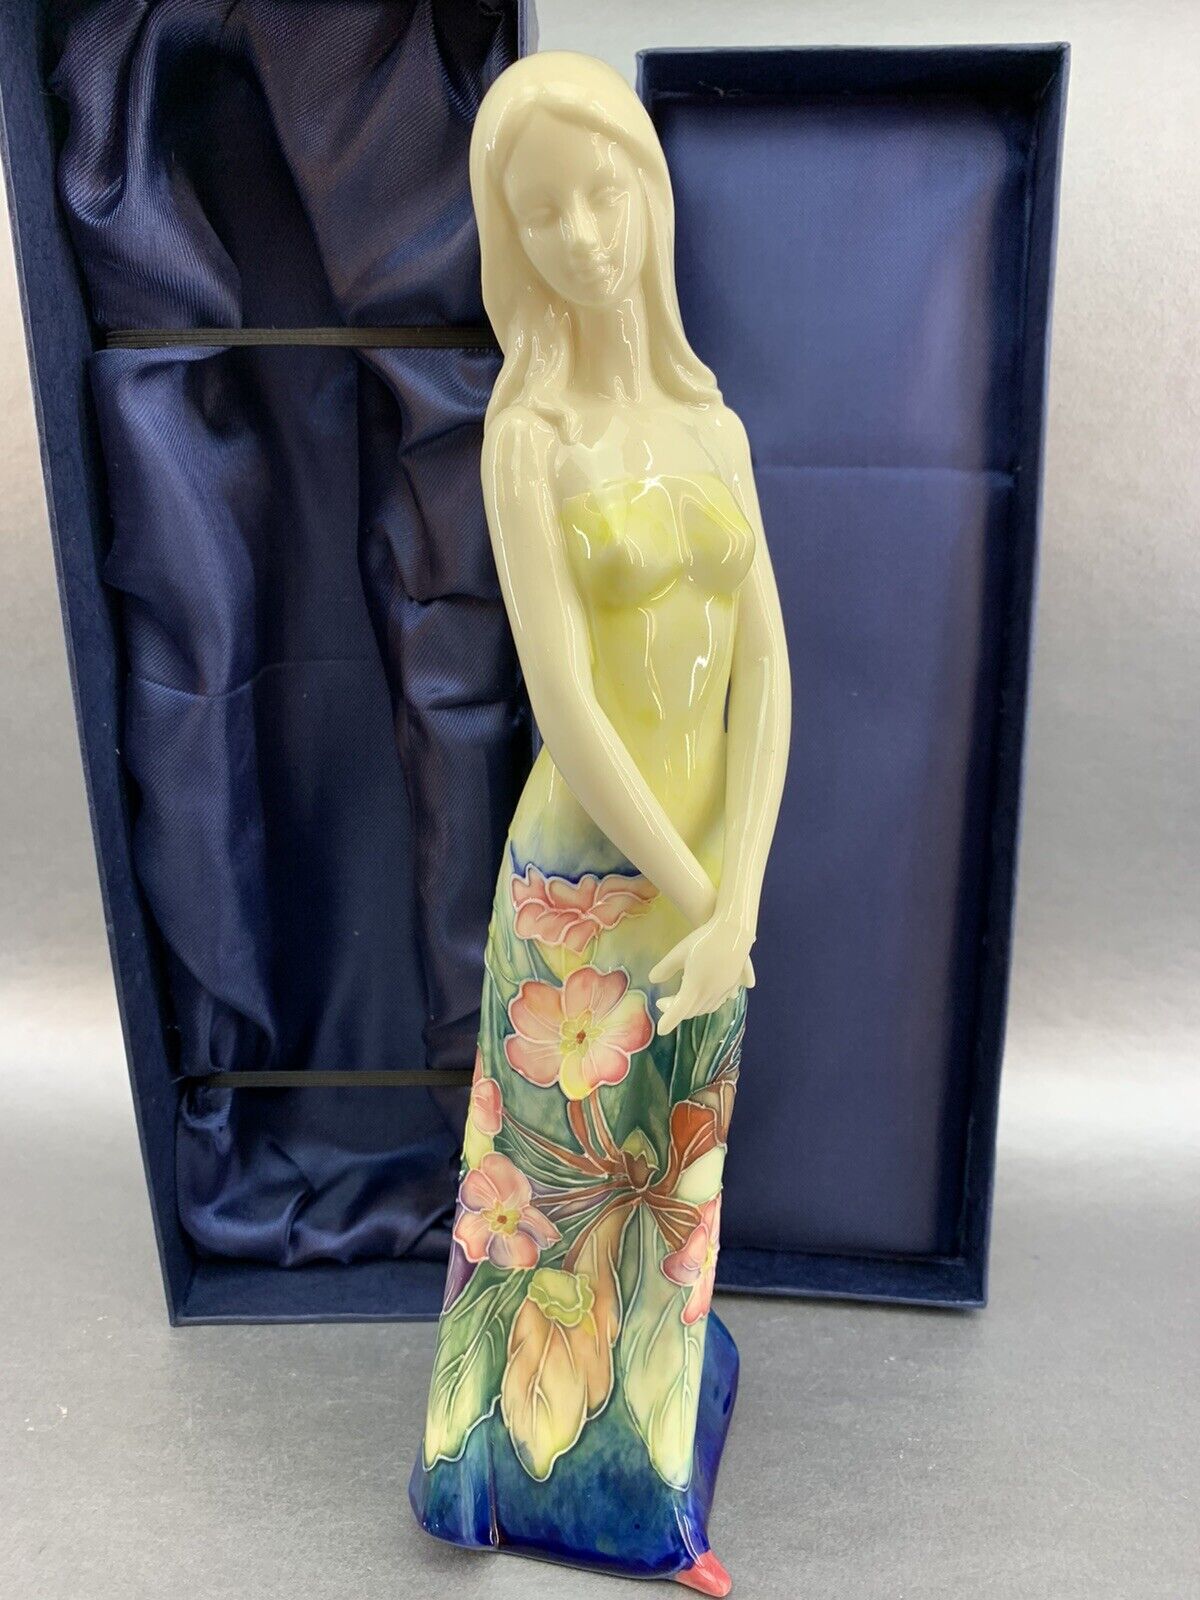 Benaya Art Porcelain Lady In Raised Colourful Dress Ceramic Figurine Statue